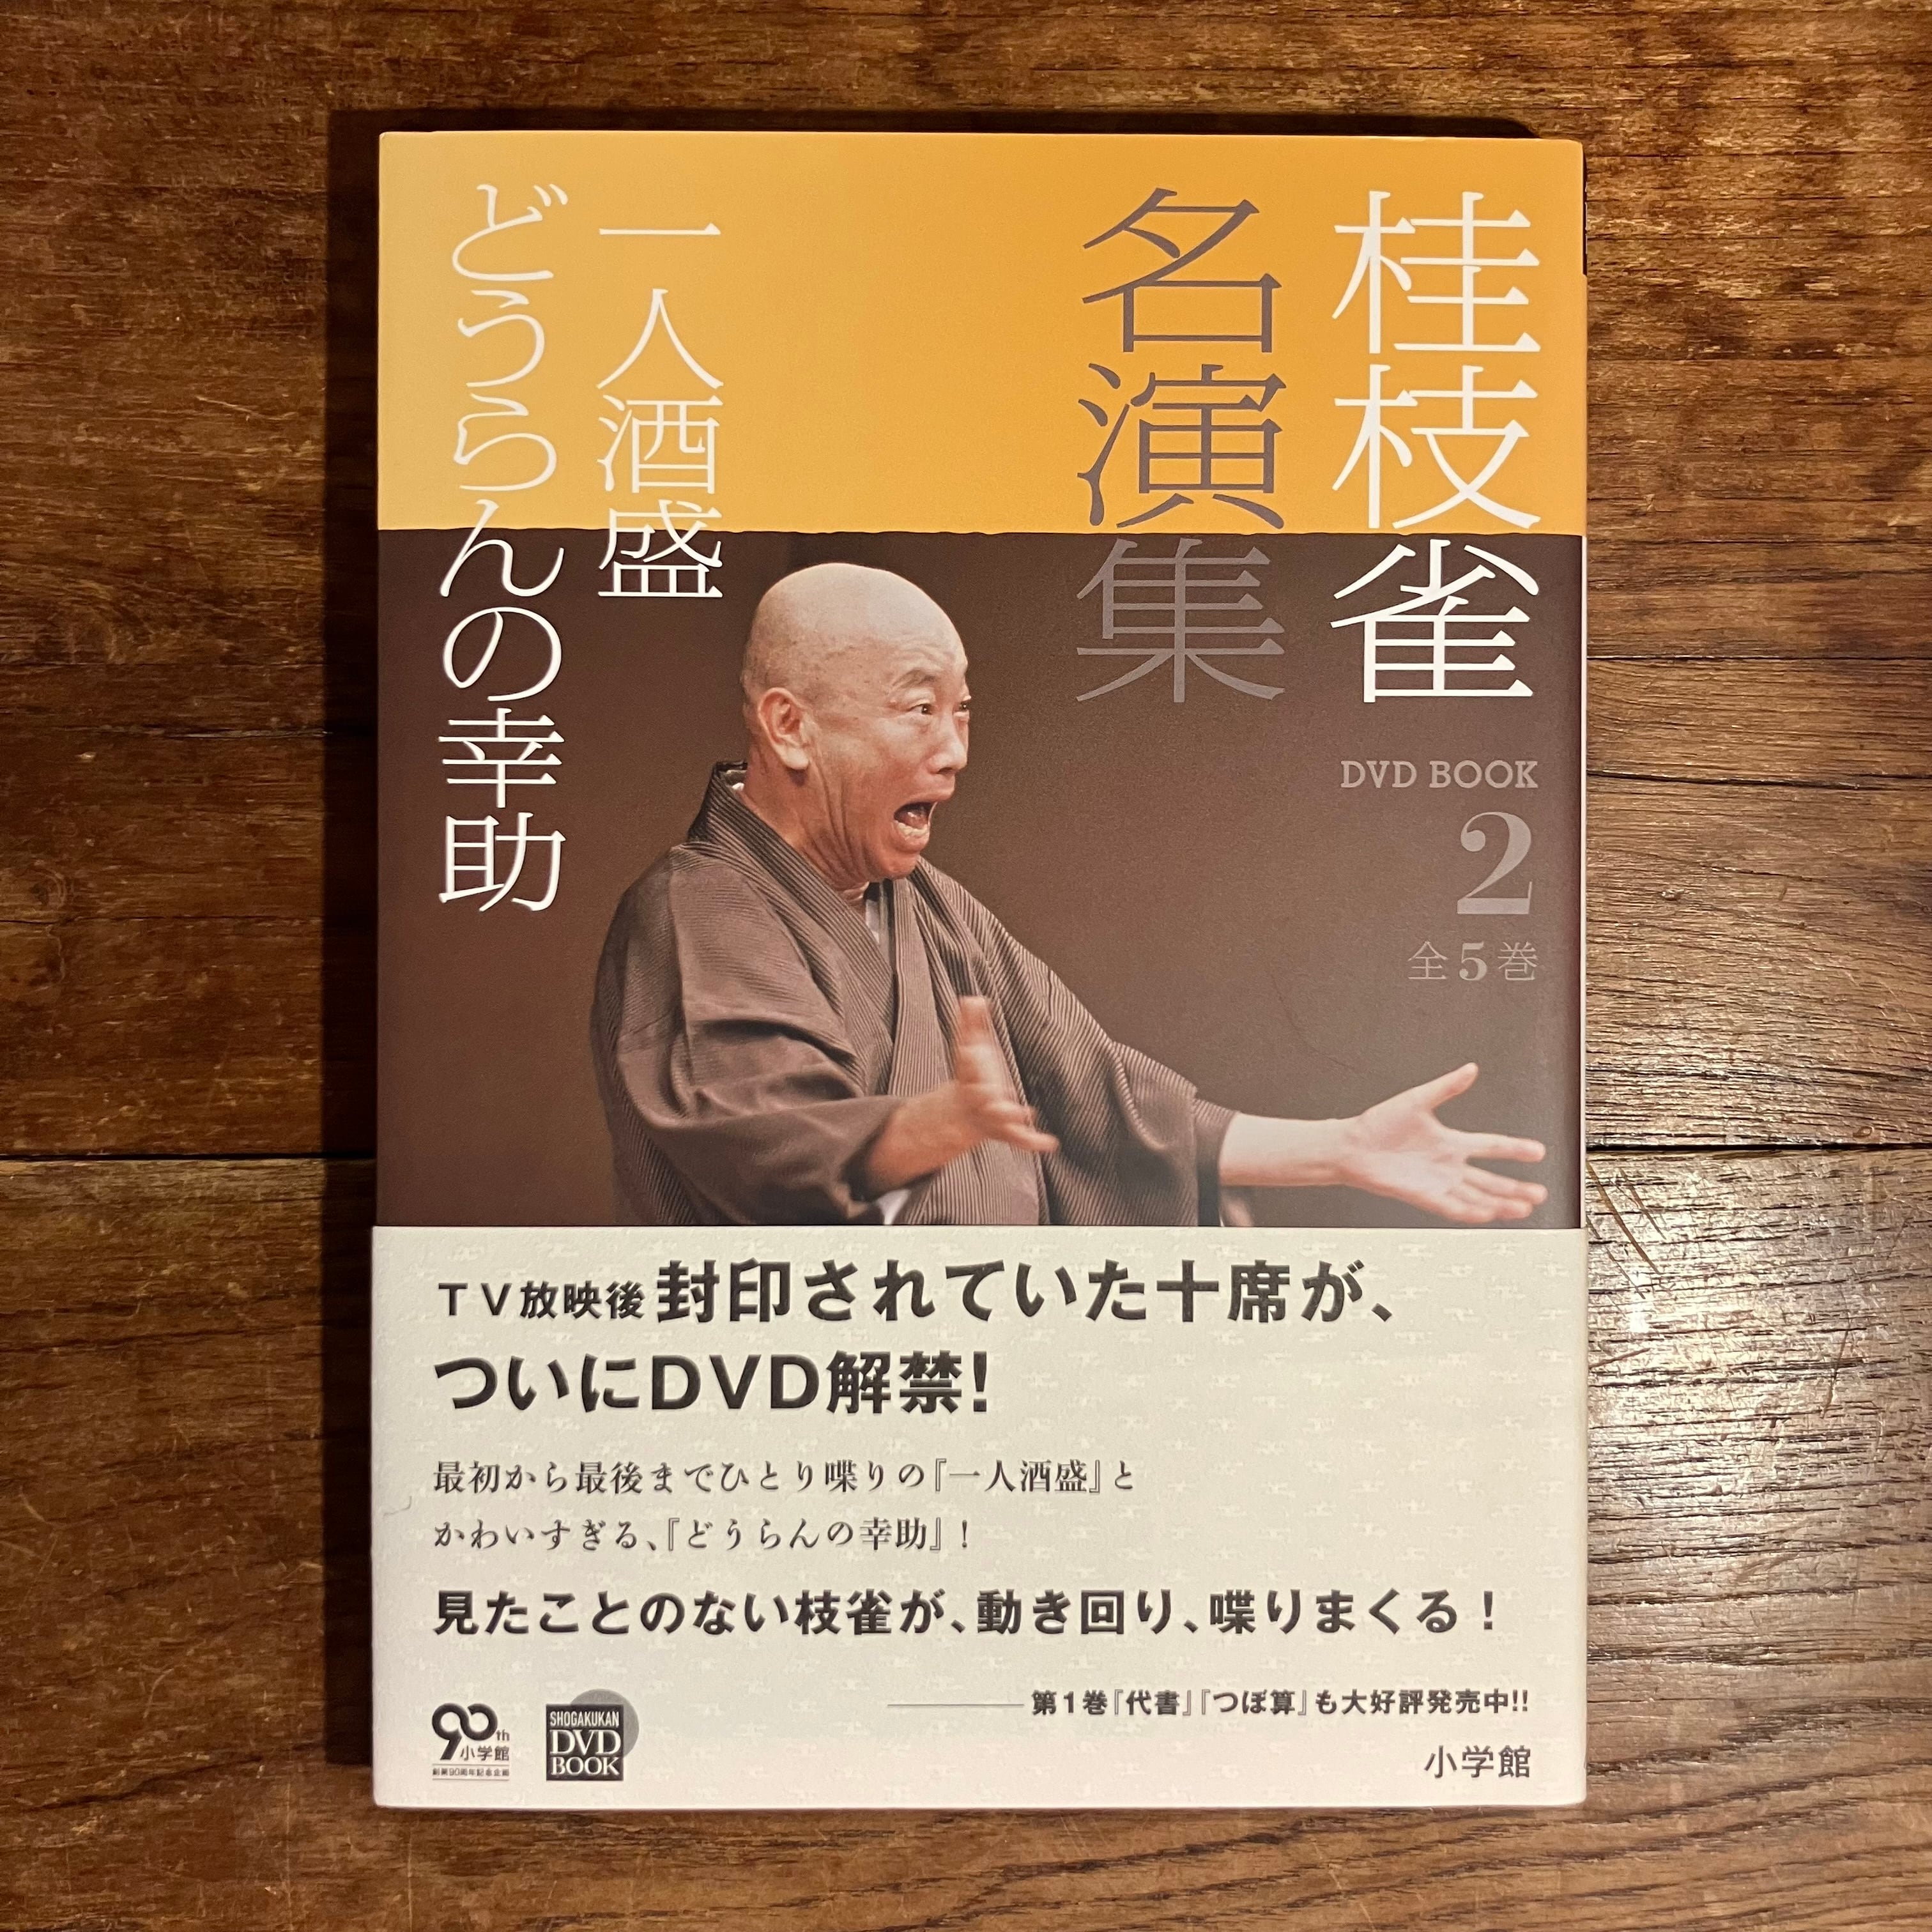 DVD BOOK『桂枝雀名演集』全5巻 | ながいひる